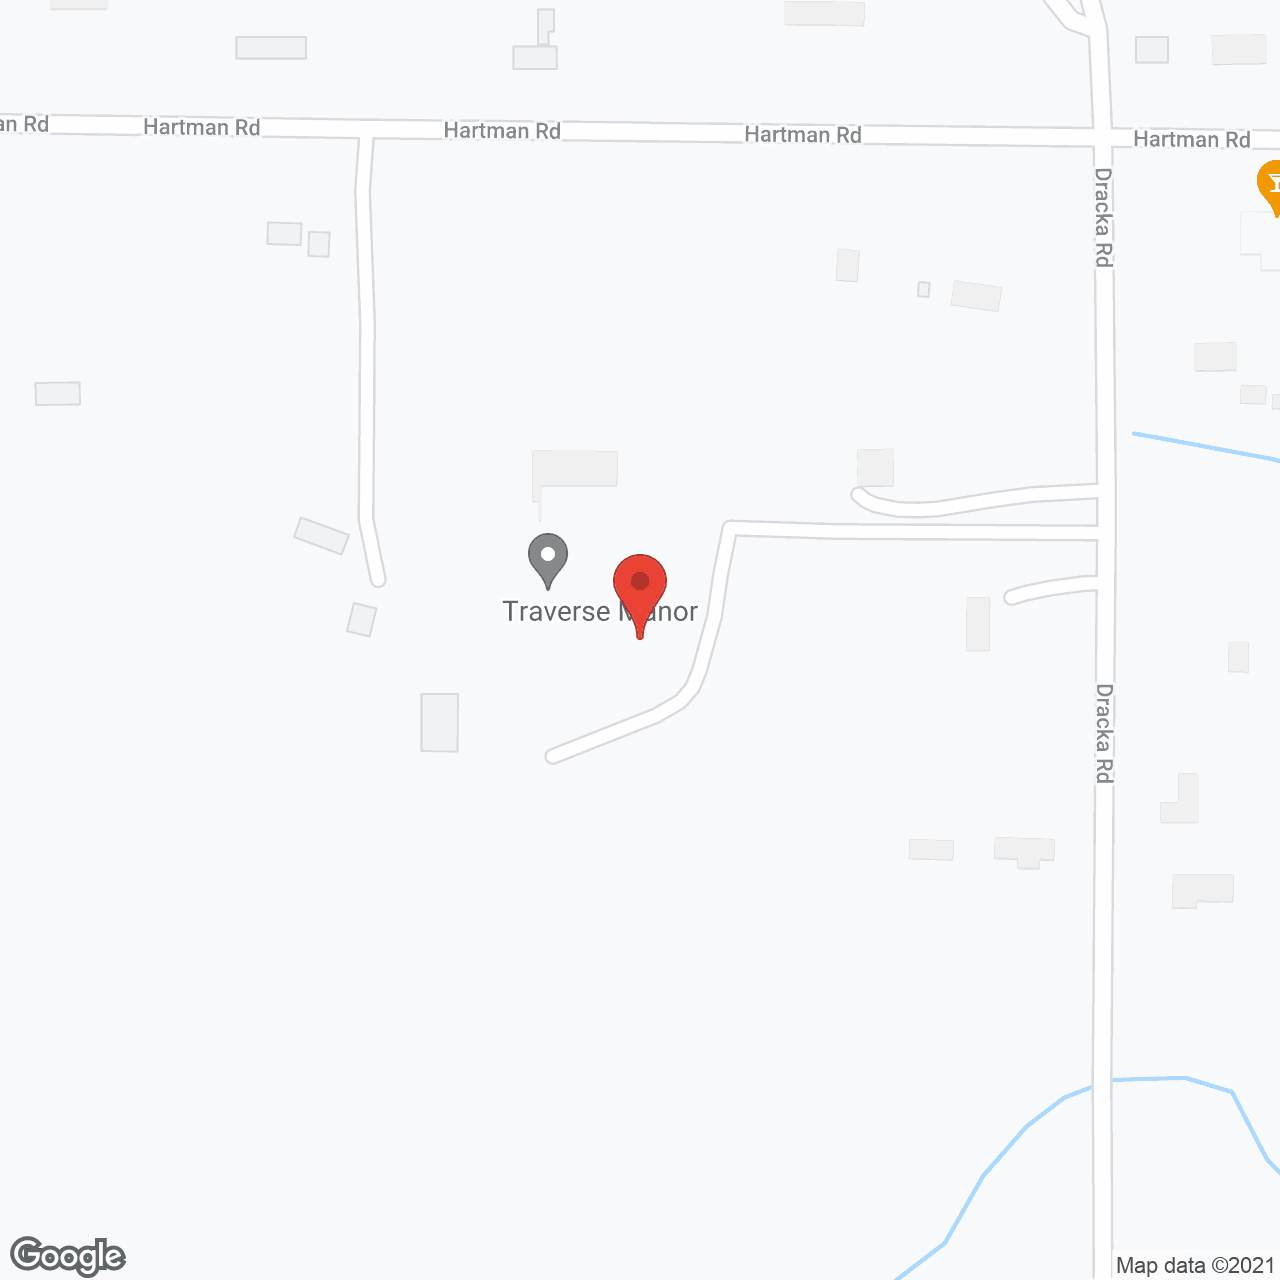 Traverse Manor in google map